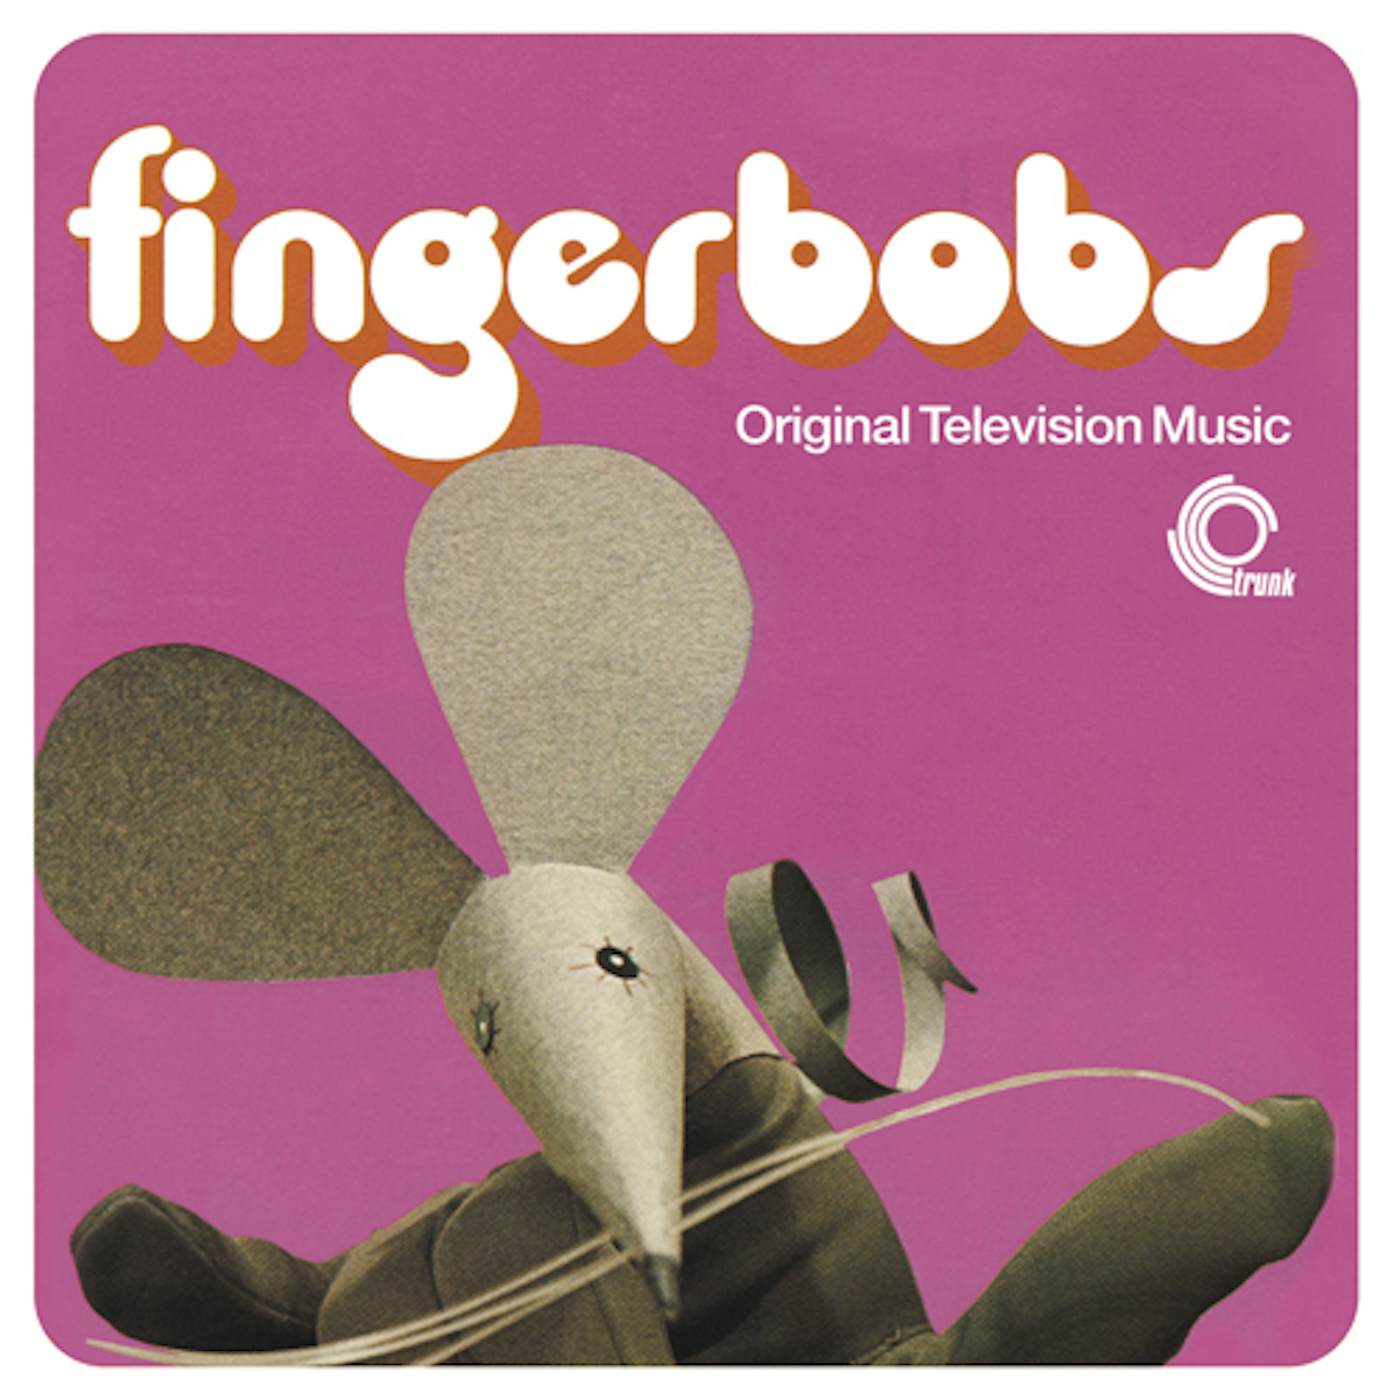 Rick Jones FINGERBOBS: ORIGINAL TELEVISION MUSIC Vinyl Record